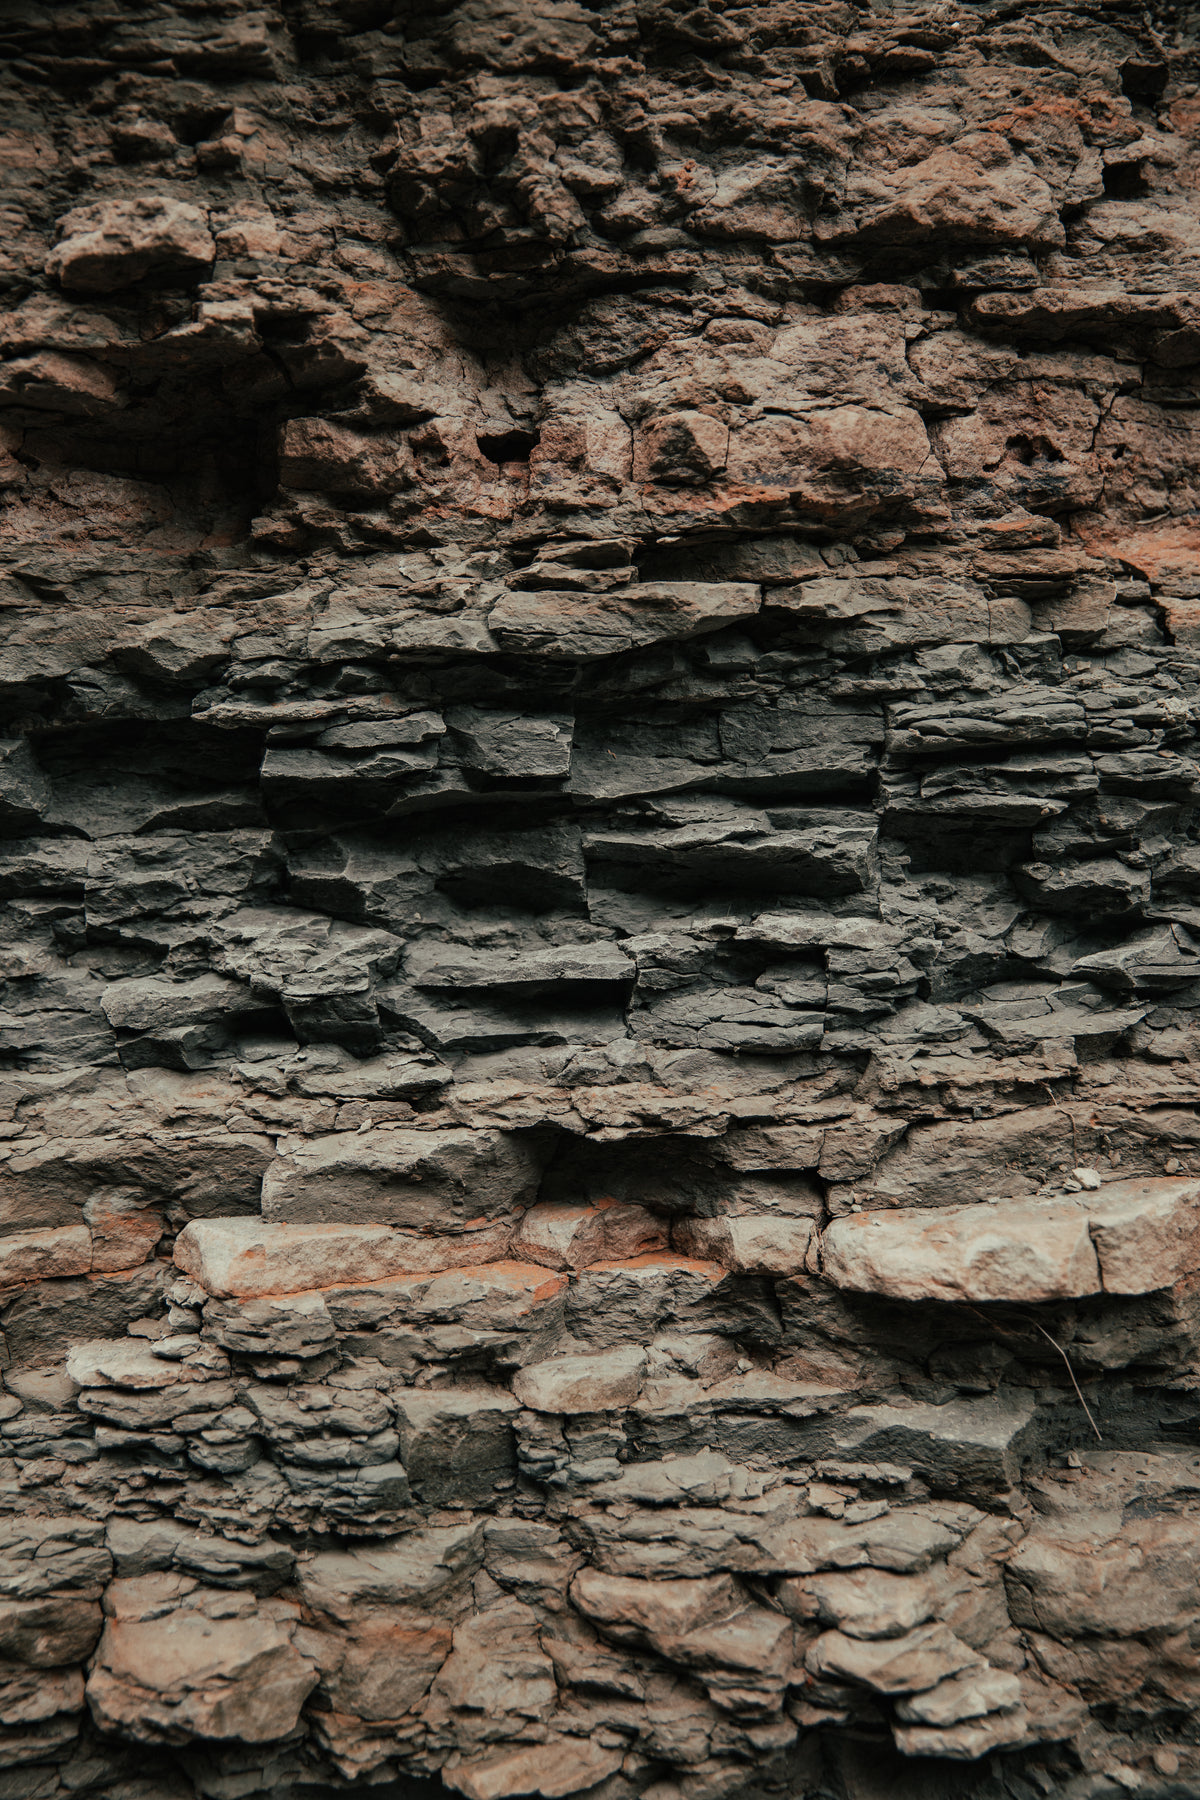 dry rough rock face texture